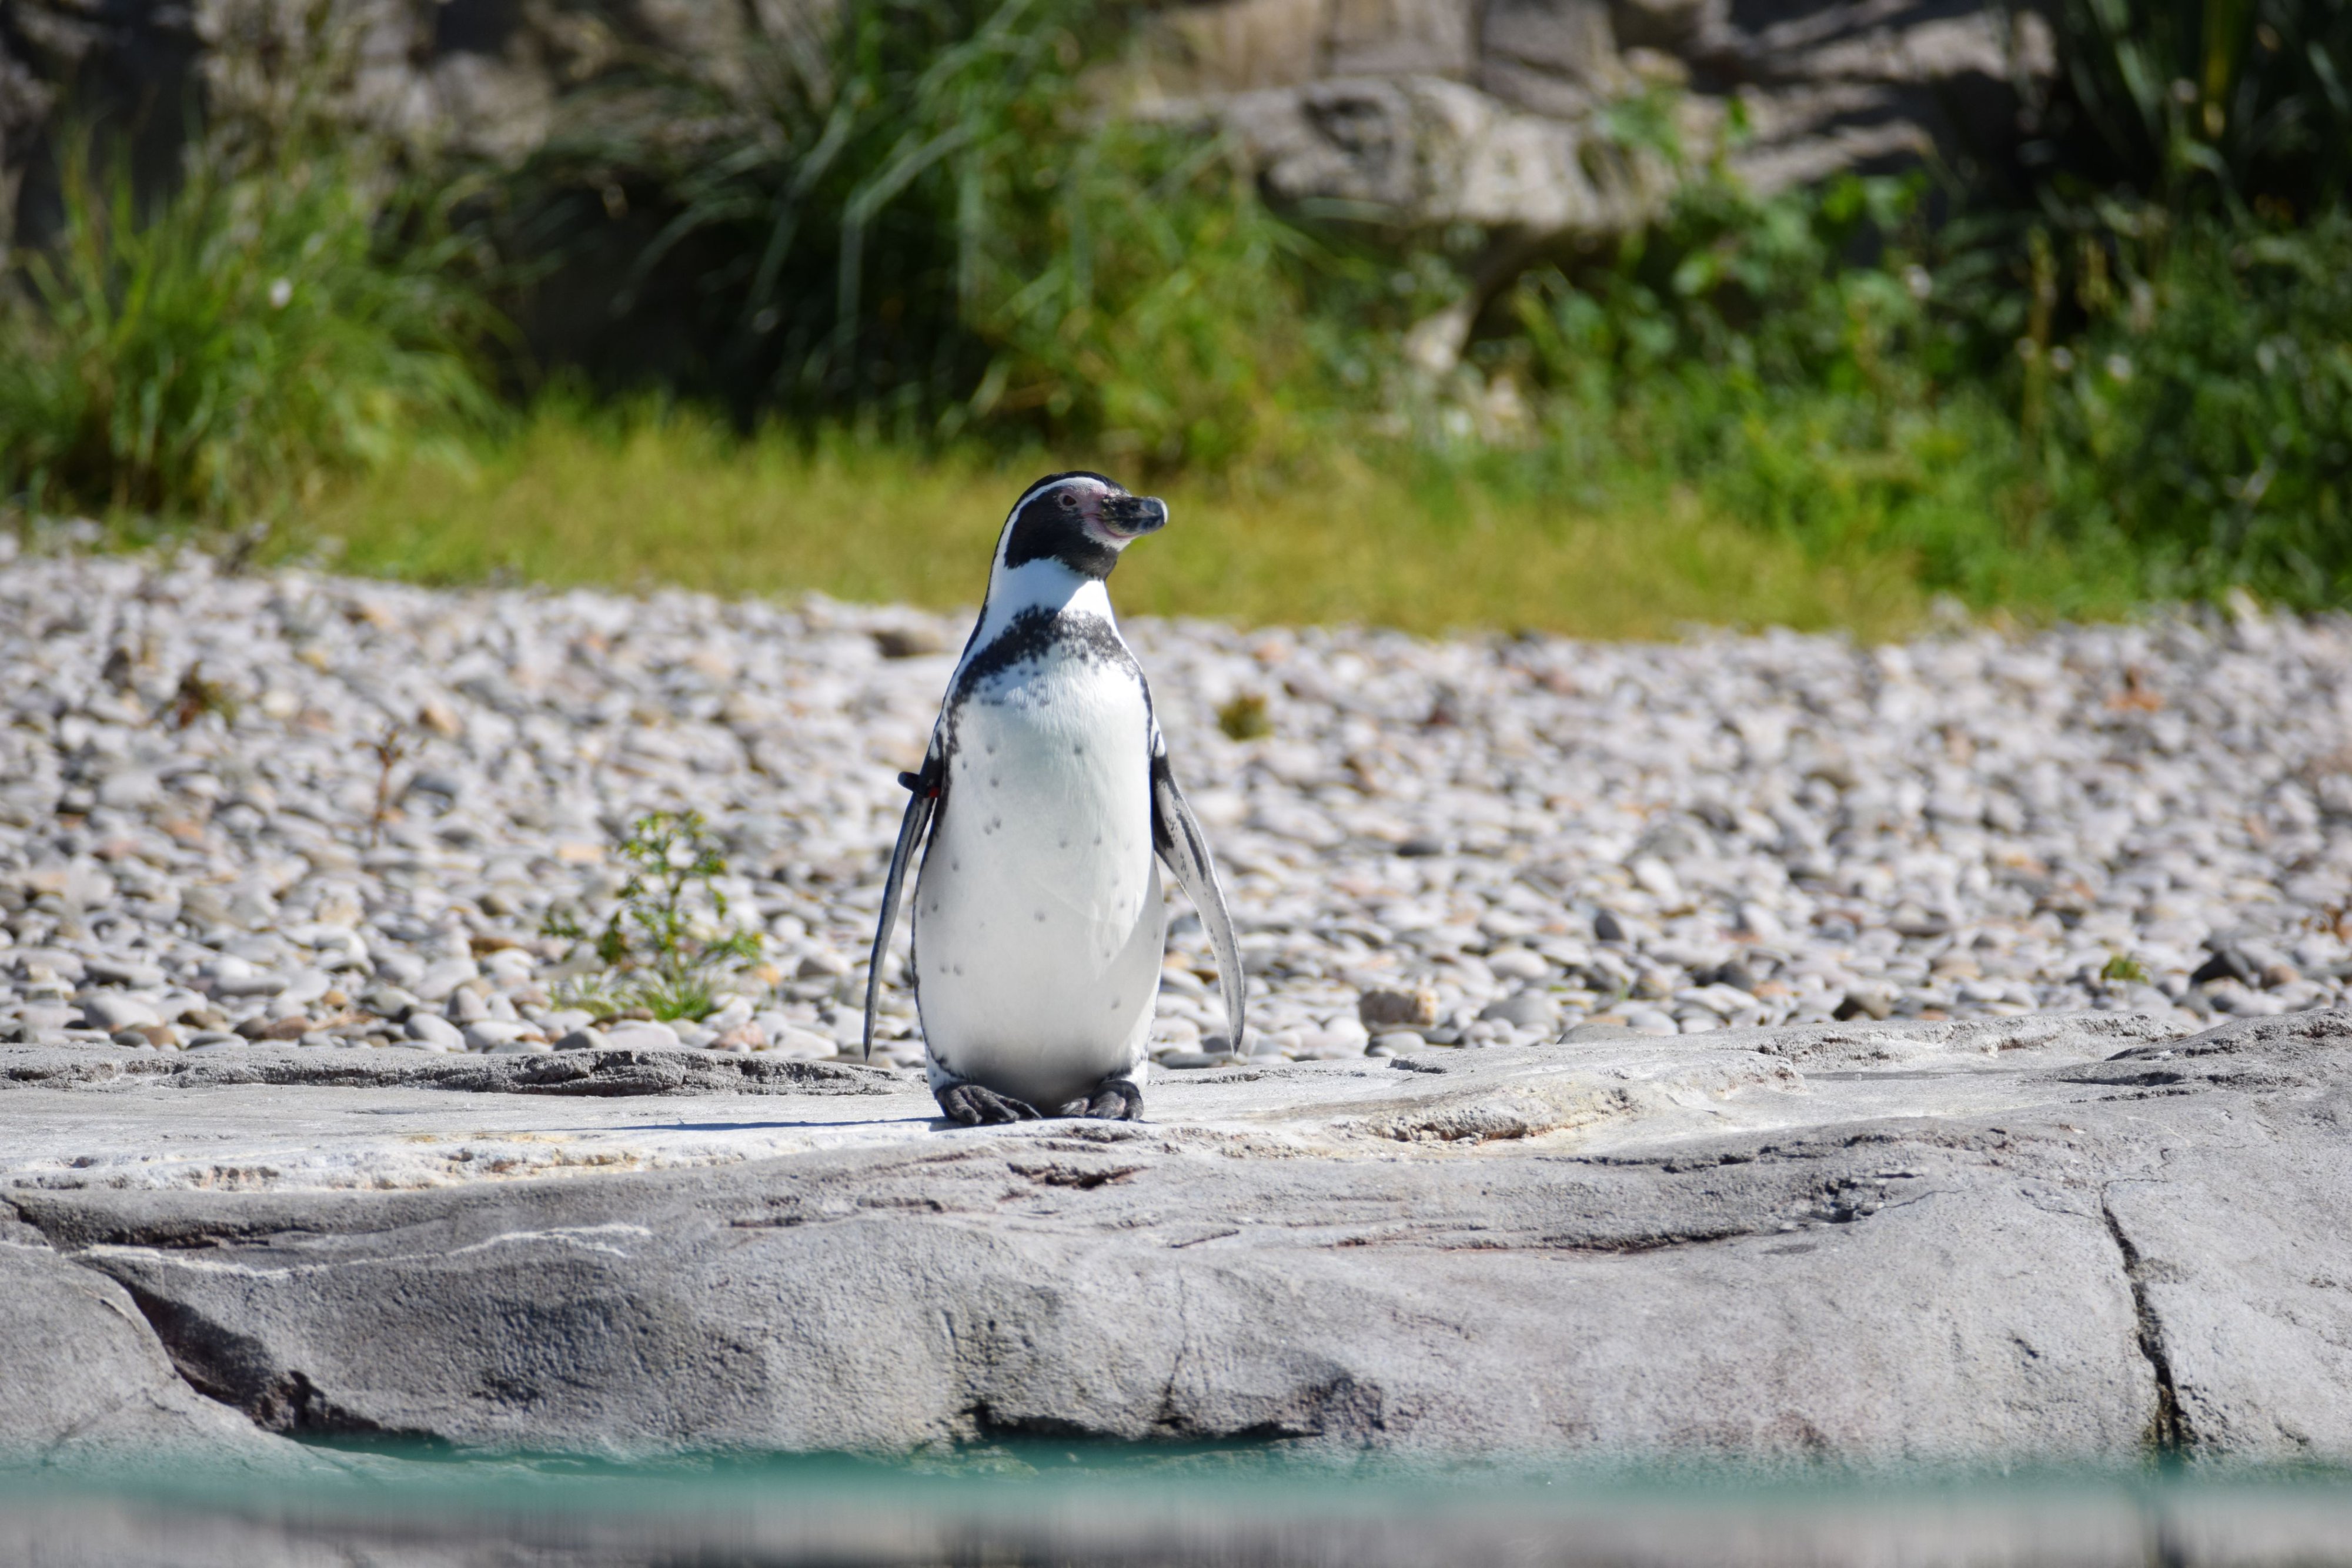 Humboldt Penguin.jpg